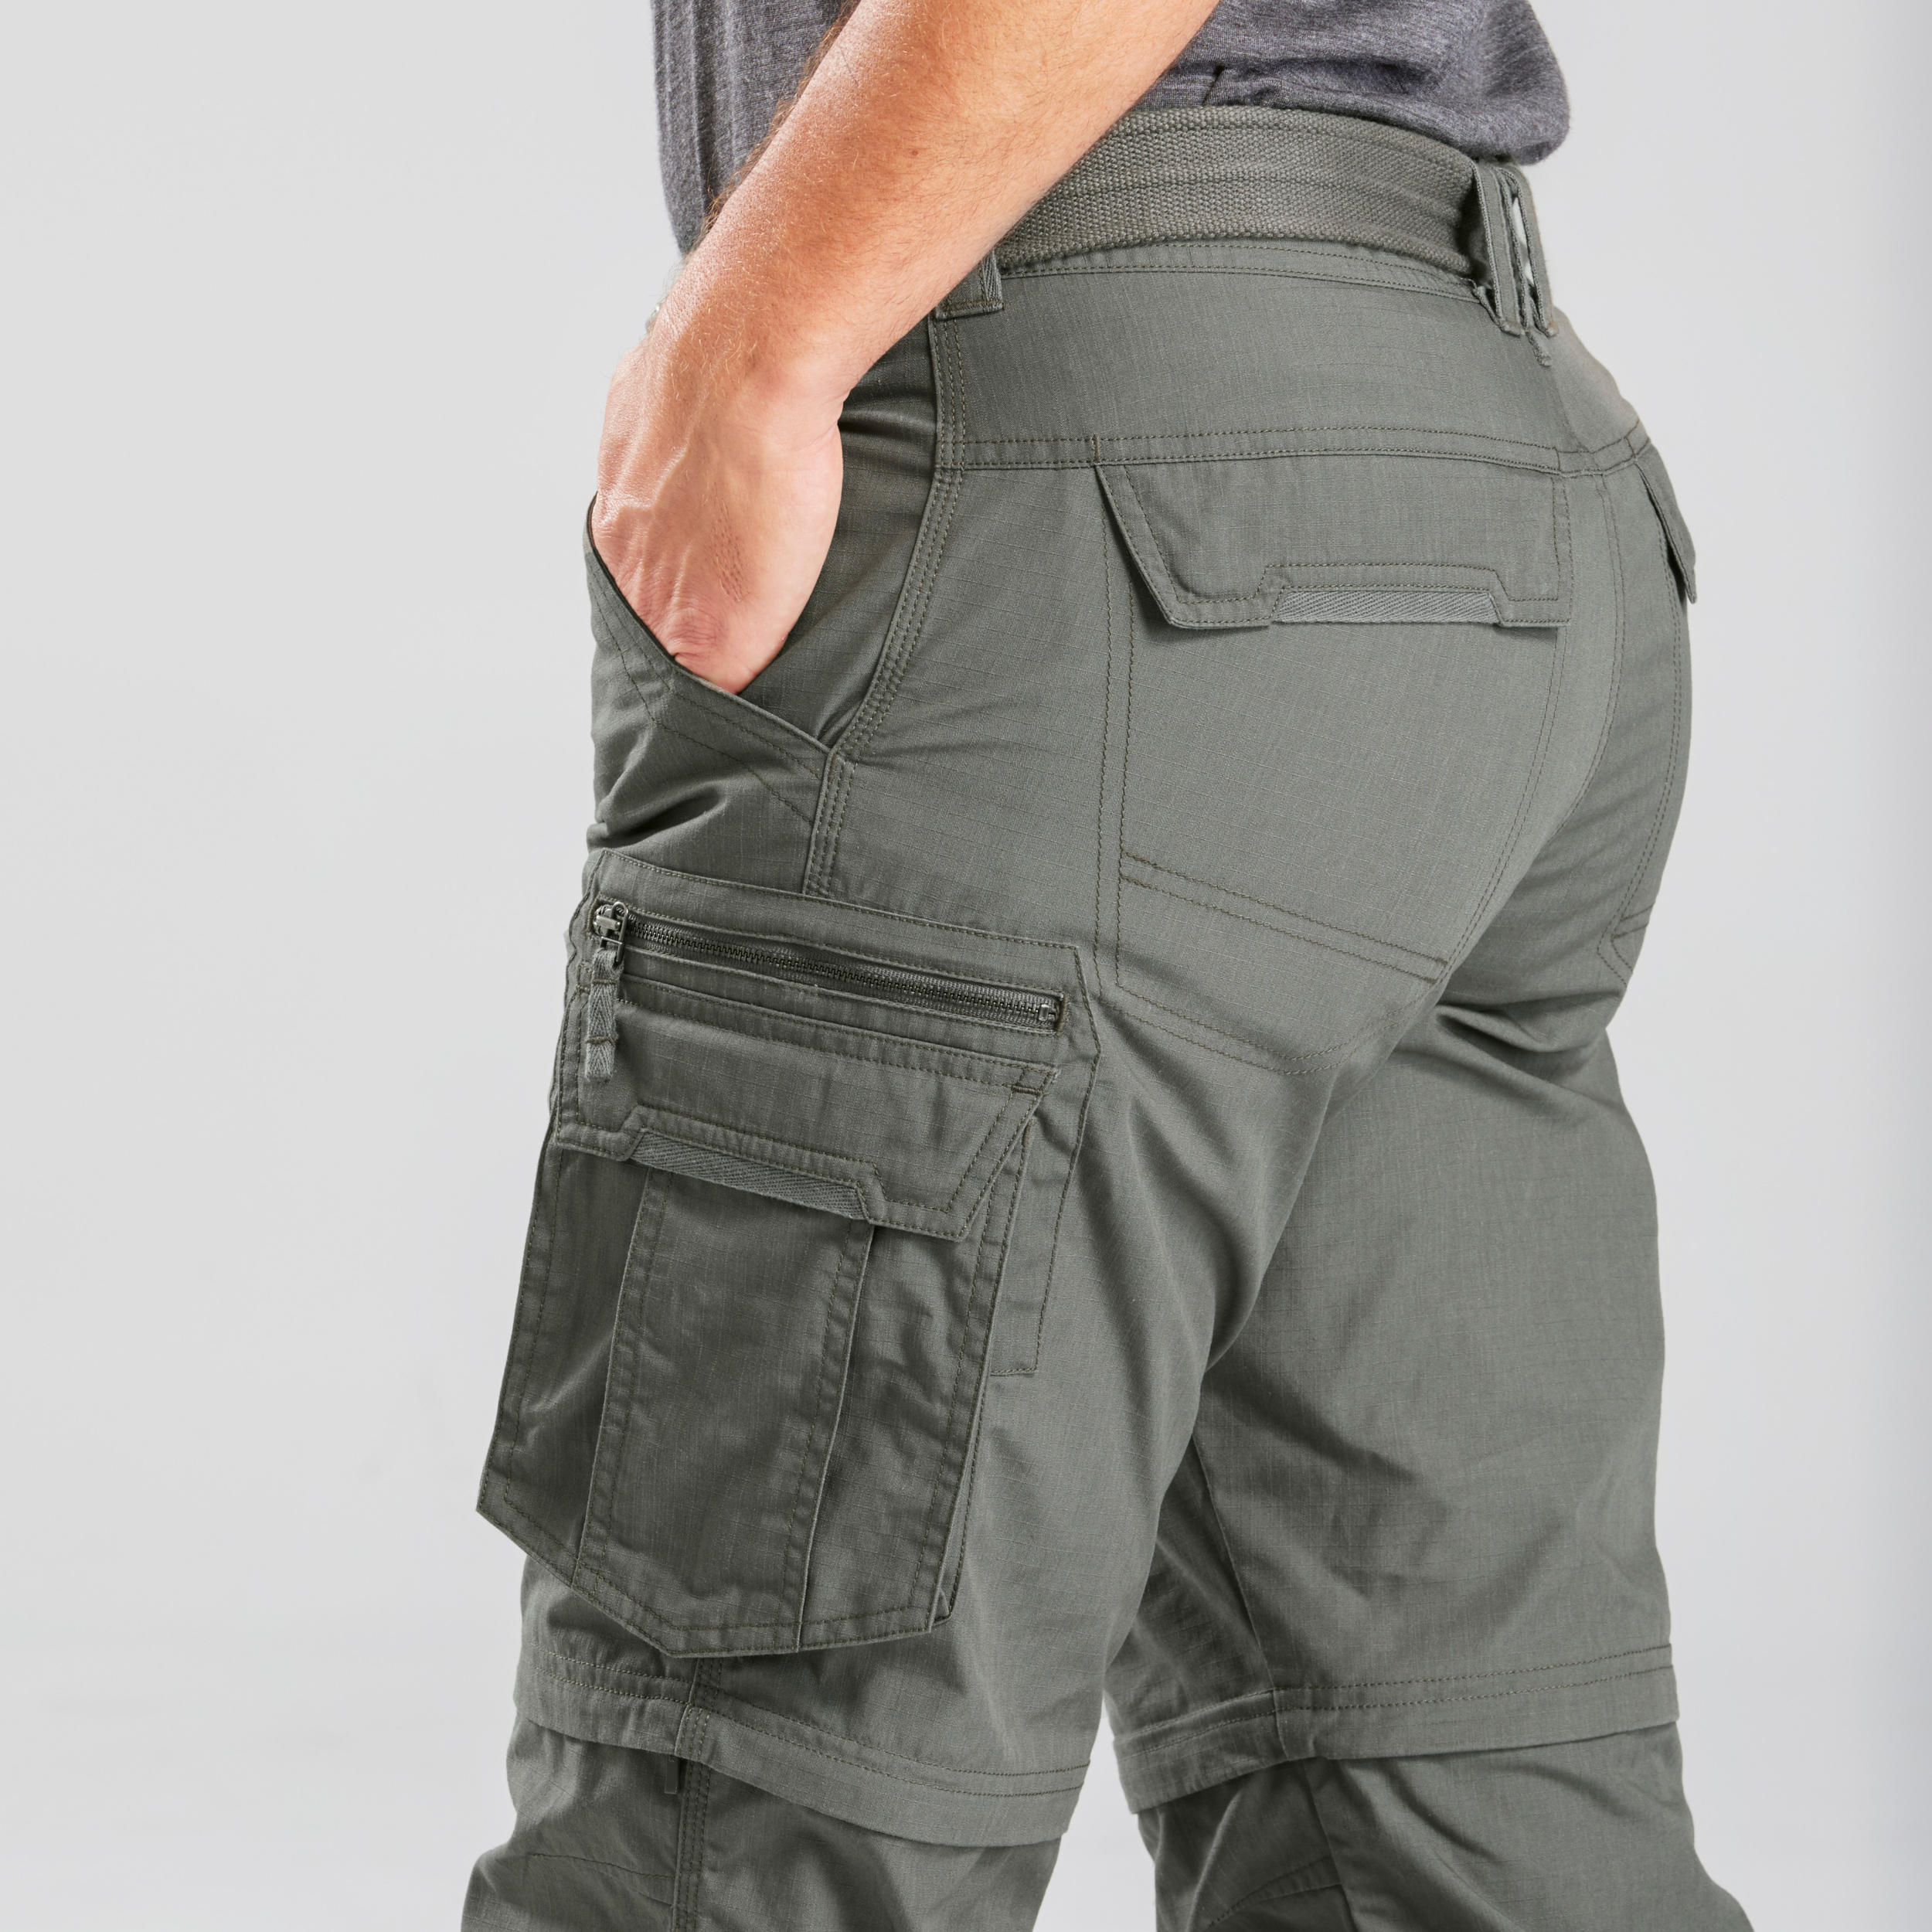 Men's Cargo Trousers Pants SG-900 - Khaki-hkpdtq2012.edu.vn